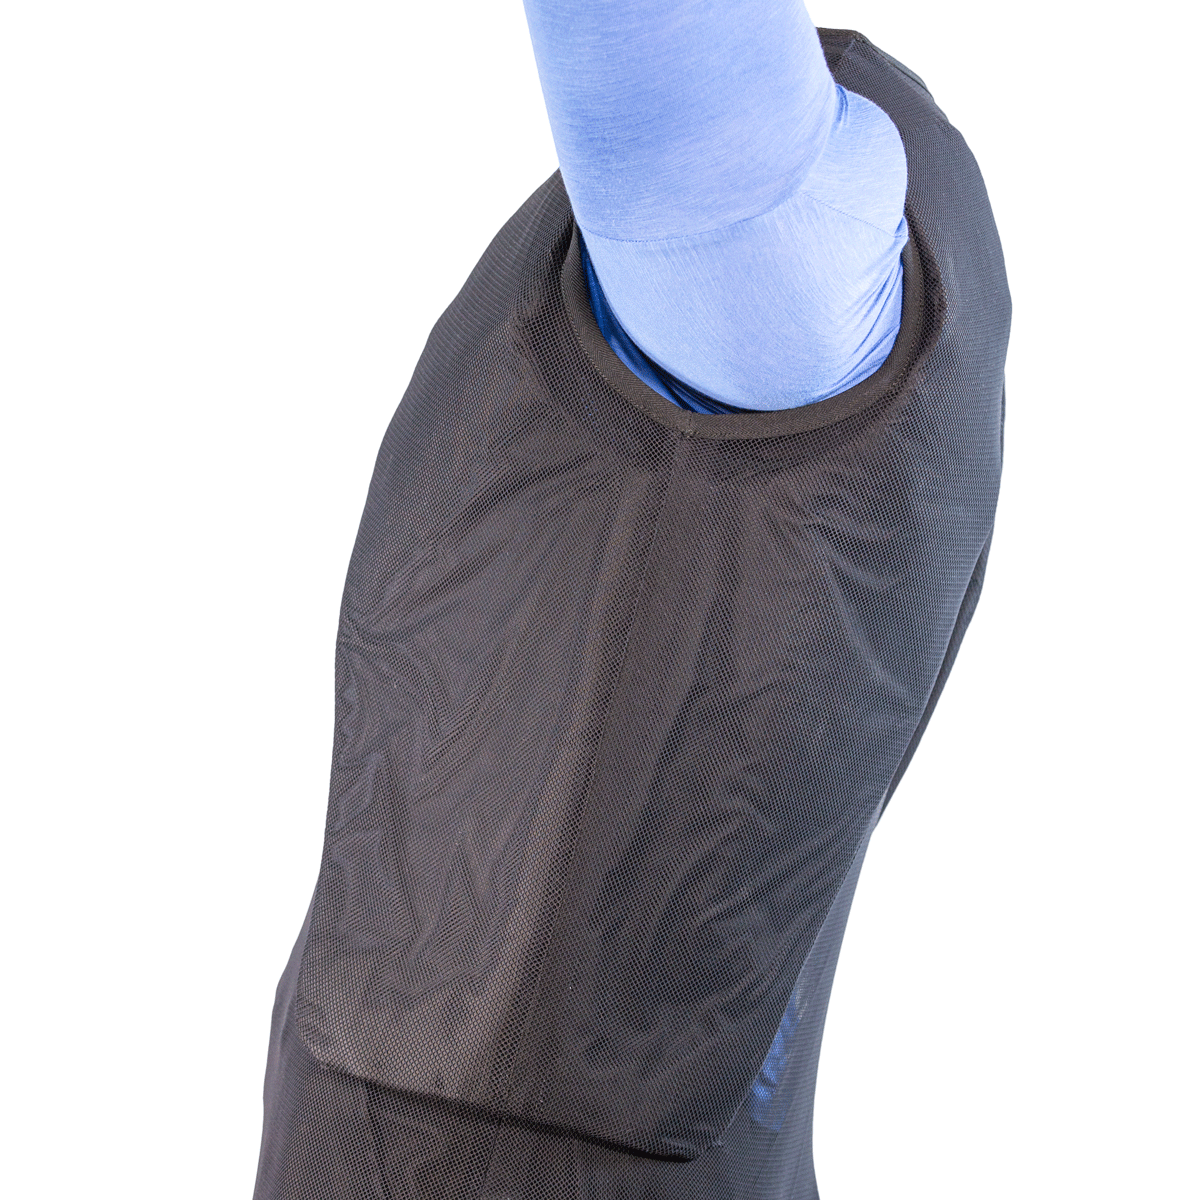 Bonowi flank protection vest side